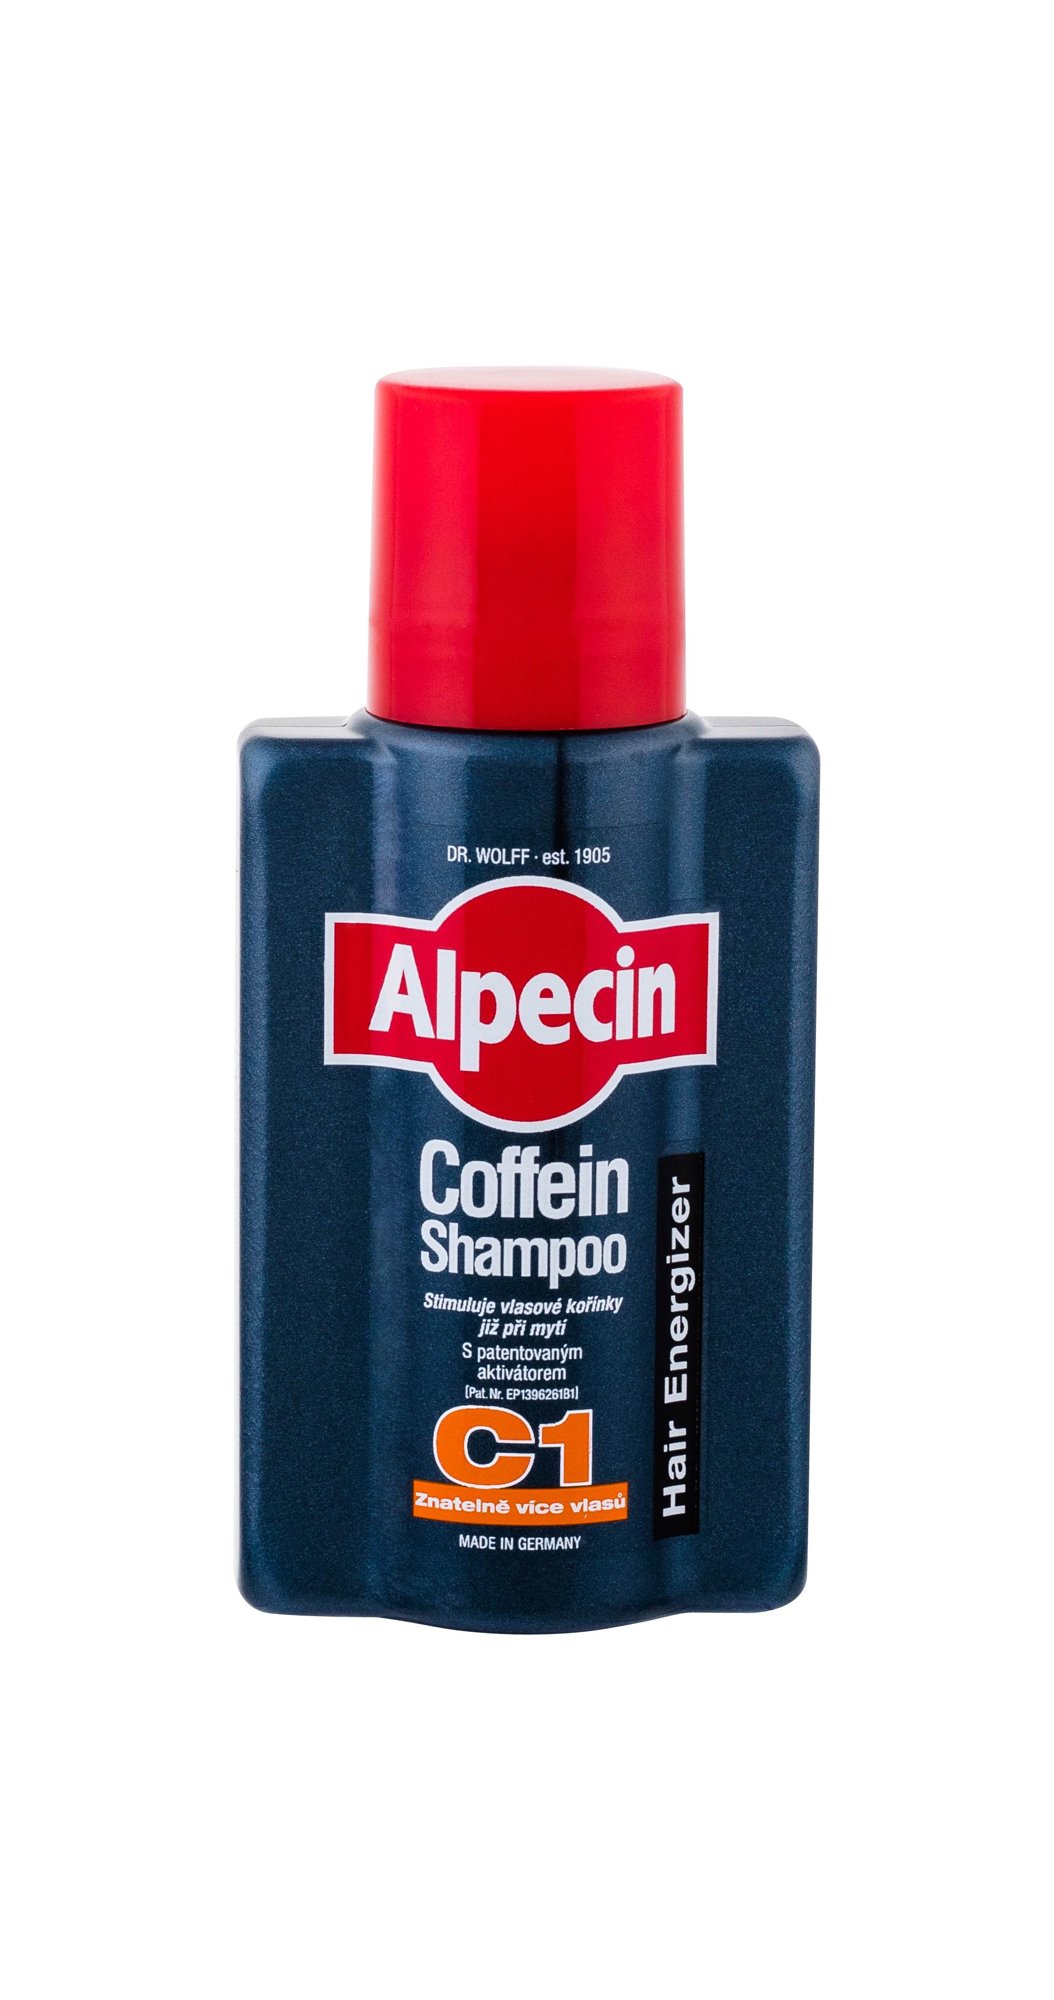 Alpecin Coffein Shampoo C1 šampūnas